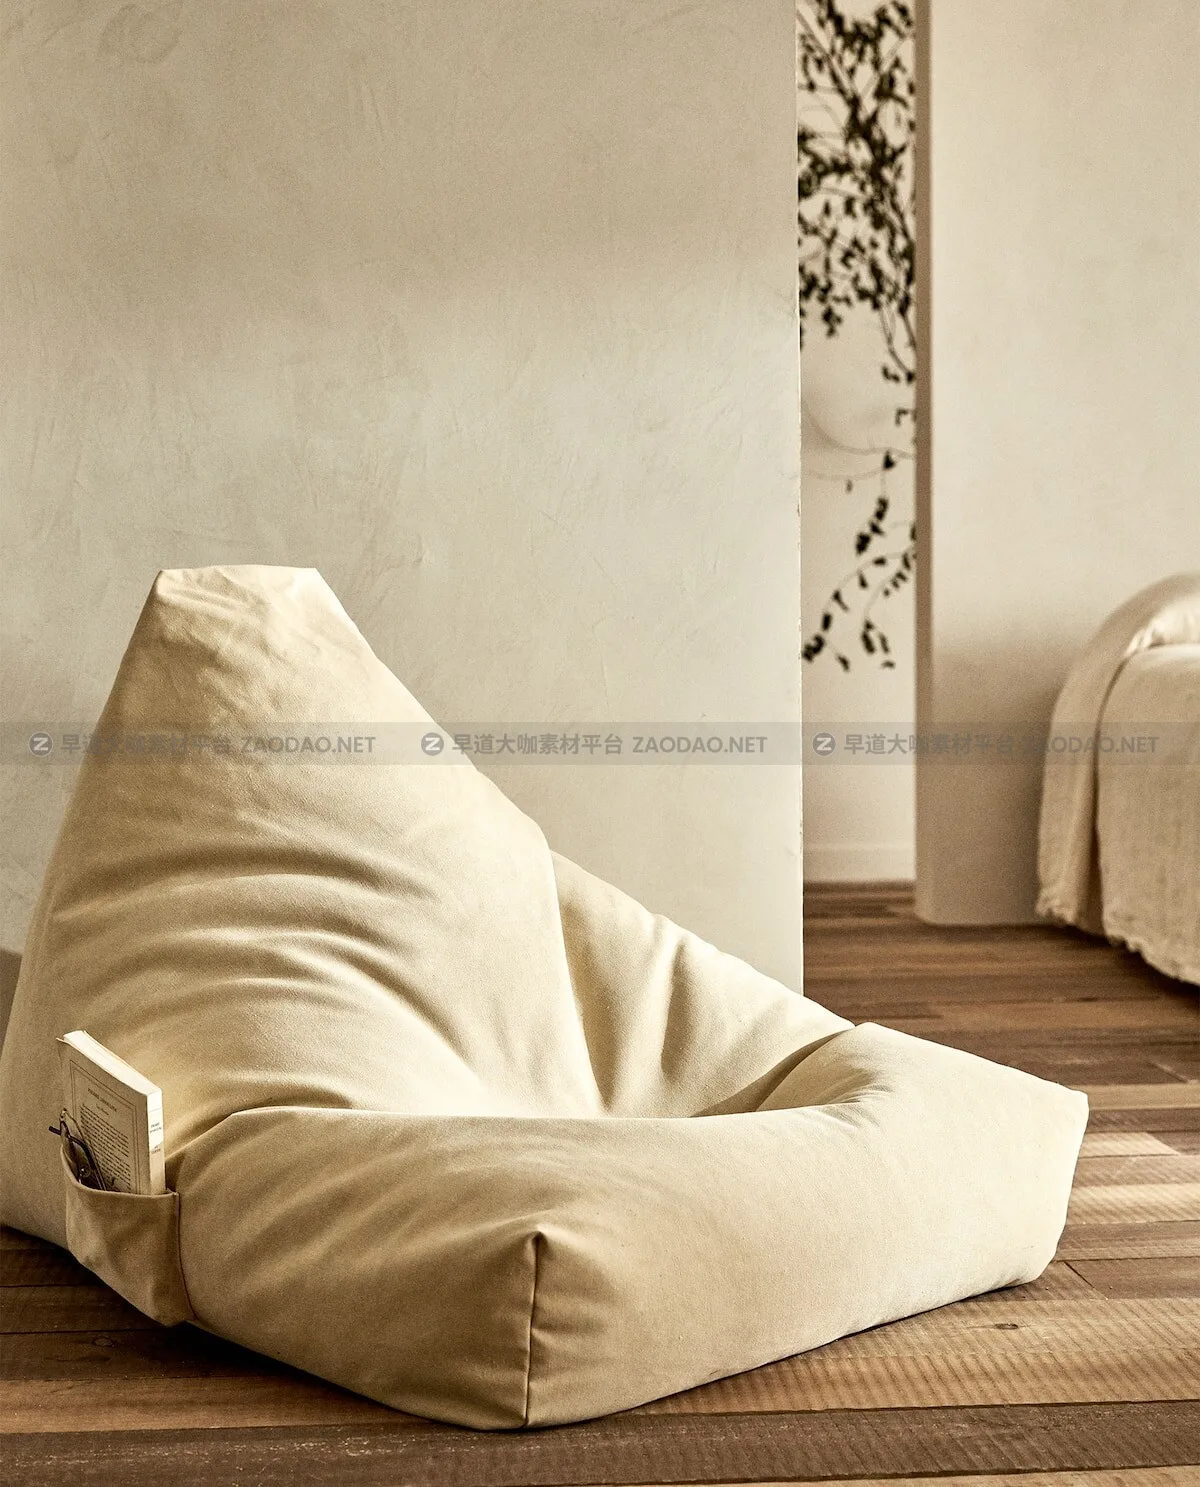 Blender 4023组室内家具桌椅灯床沙发装饰橱柜绿植3D模型资产预设 Interior Models VOL1,VOL3插图18